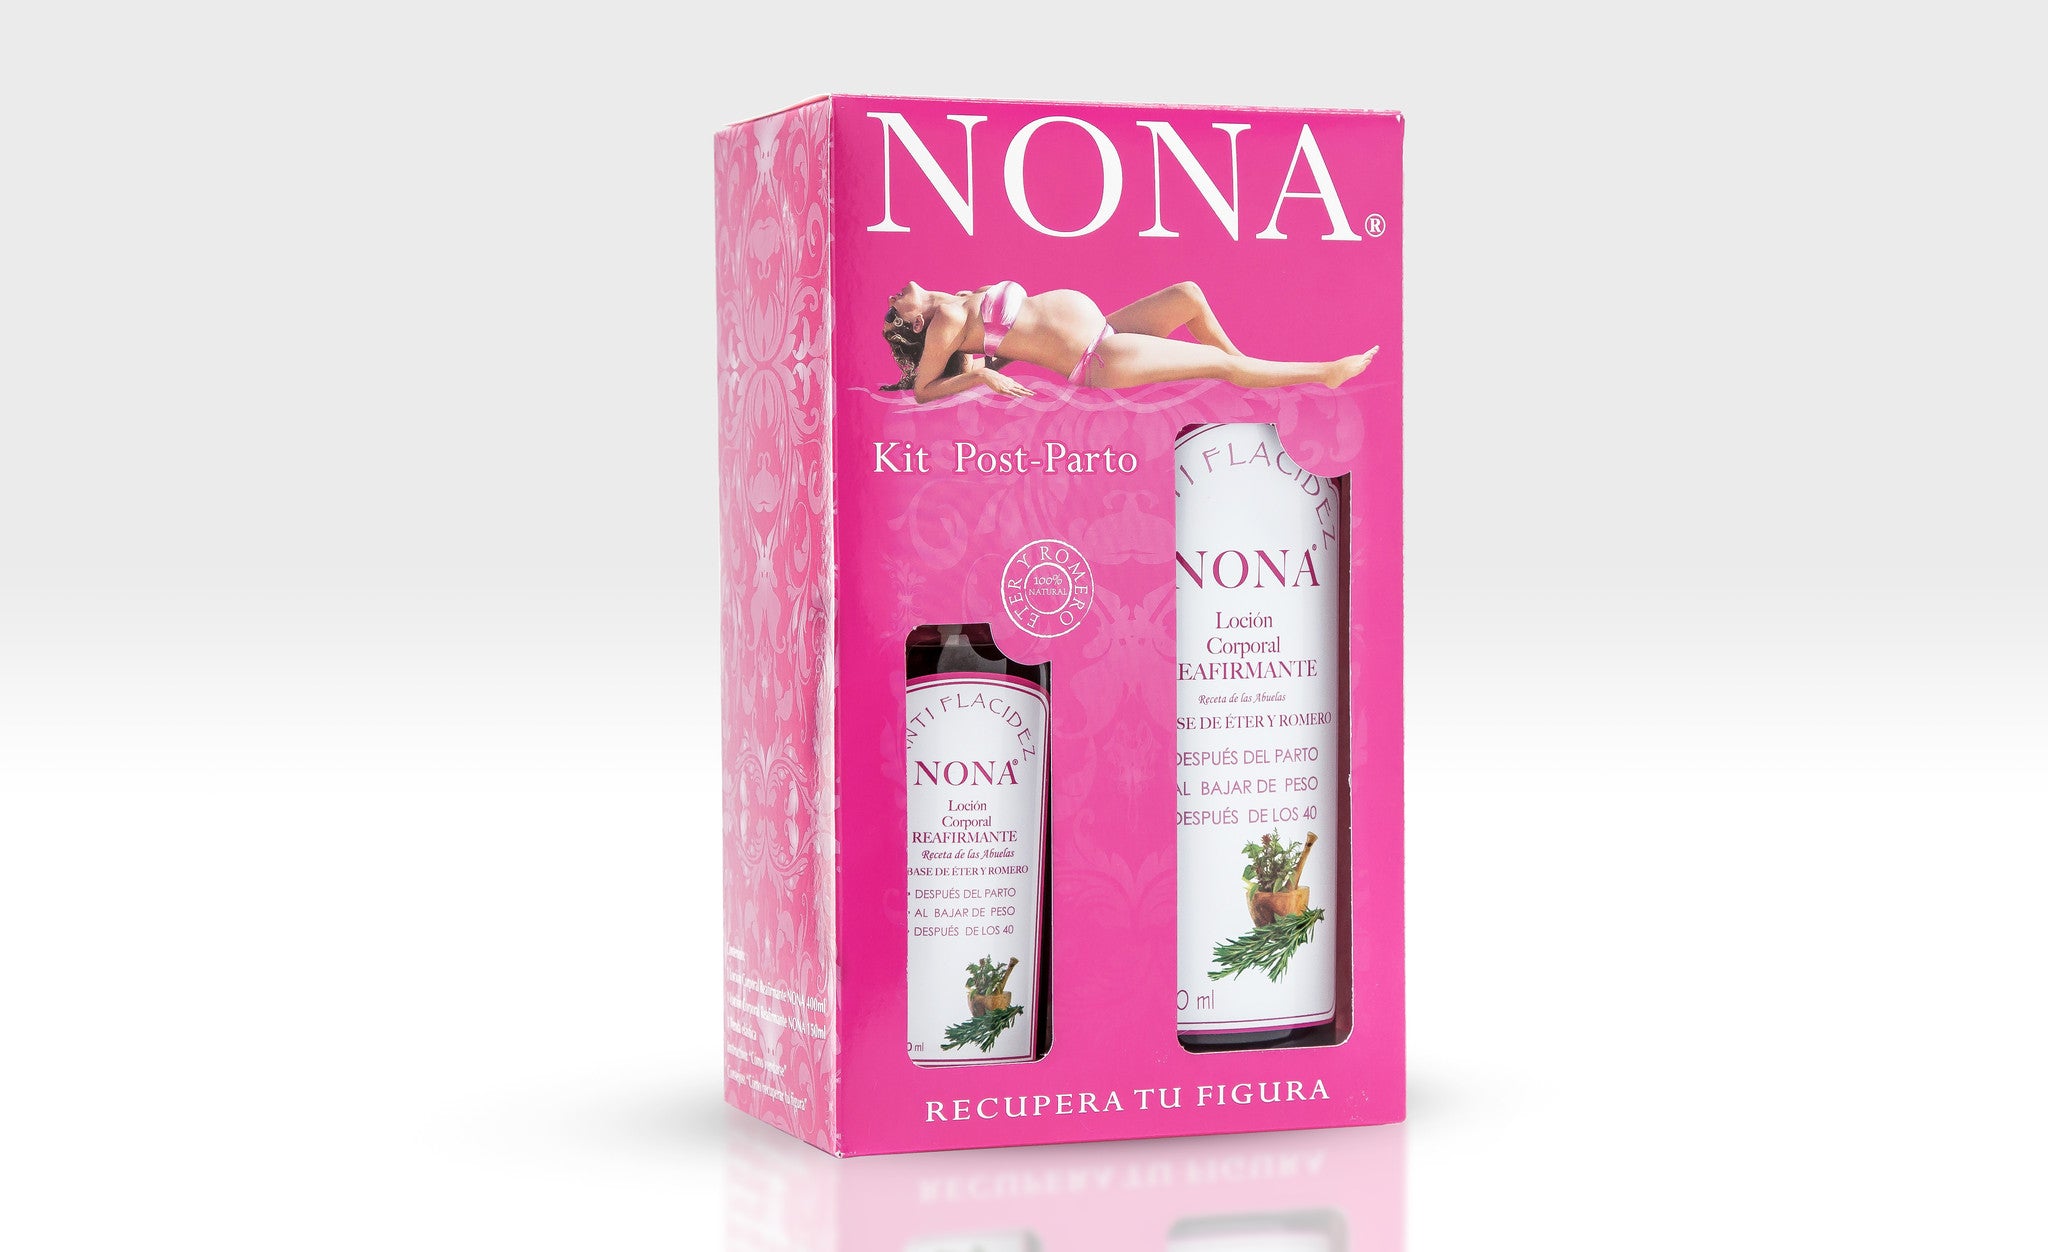 NONA Kit Post-Parto - Incluye Nona 150ml + NONA 400 ml. + Venda